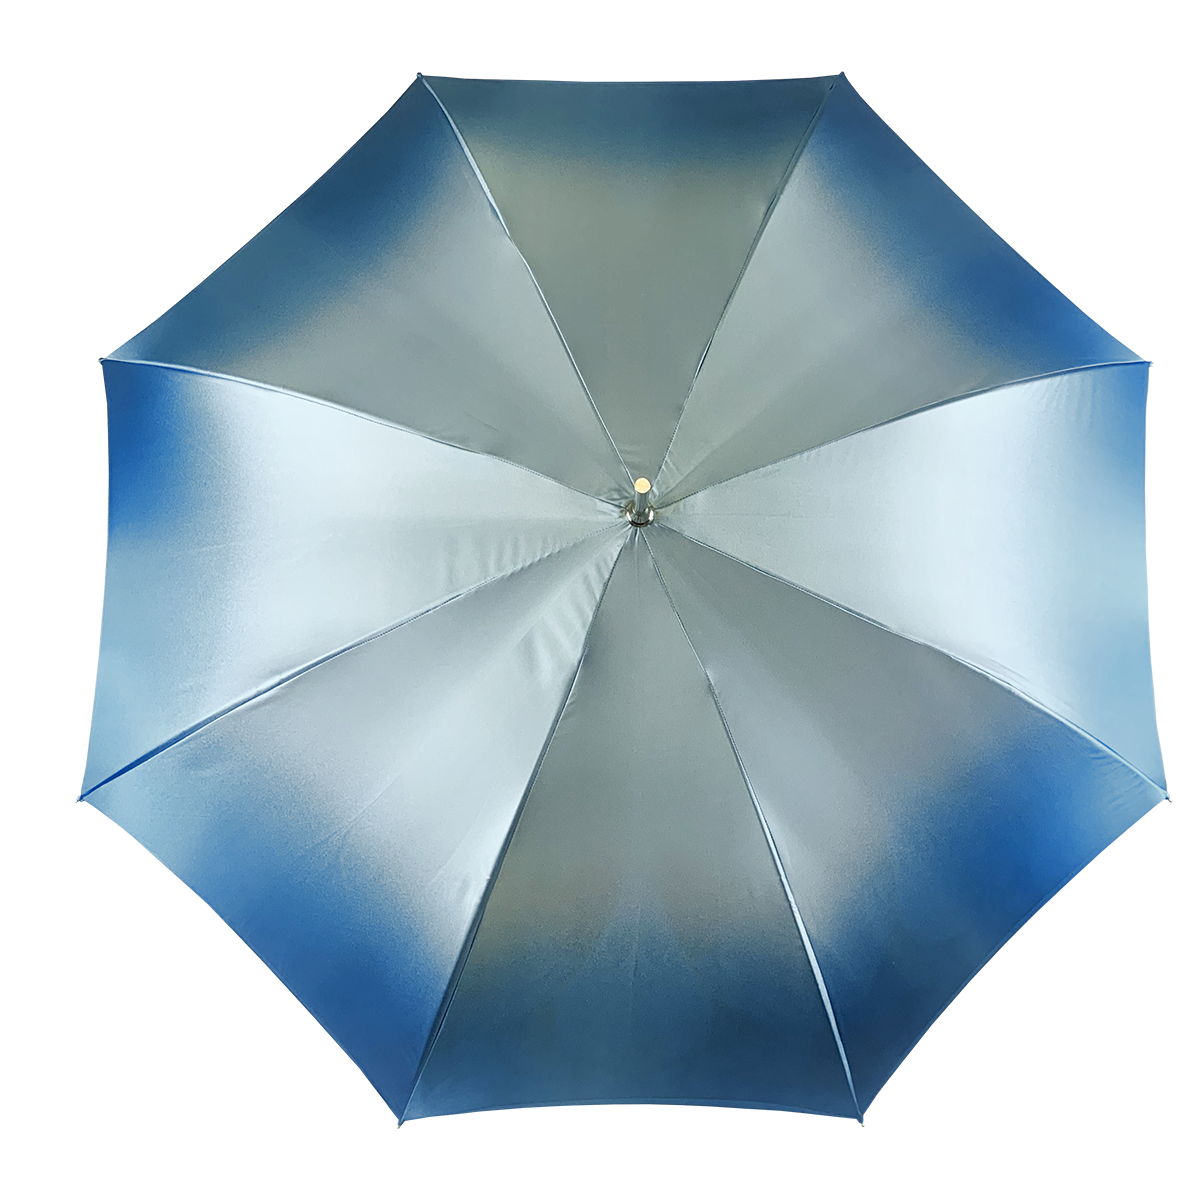 Wonderful light blue Umbrella with abstract marine design